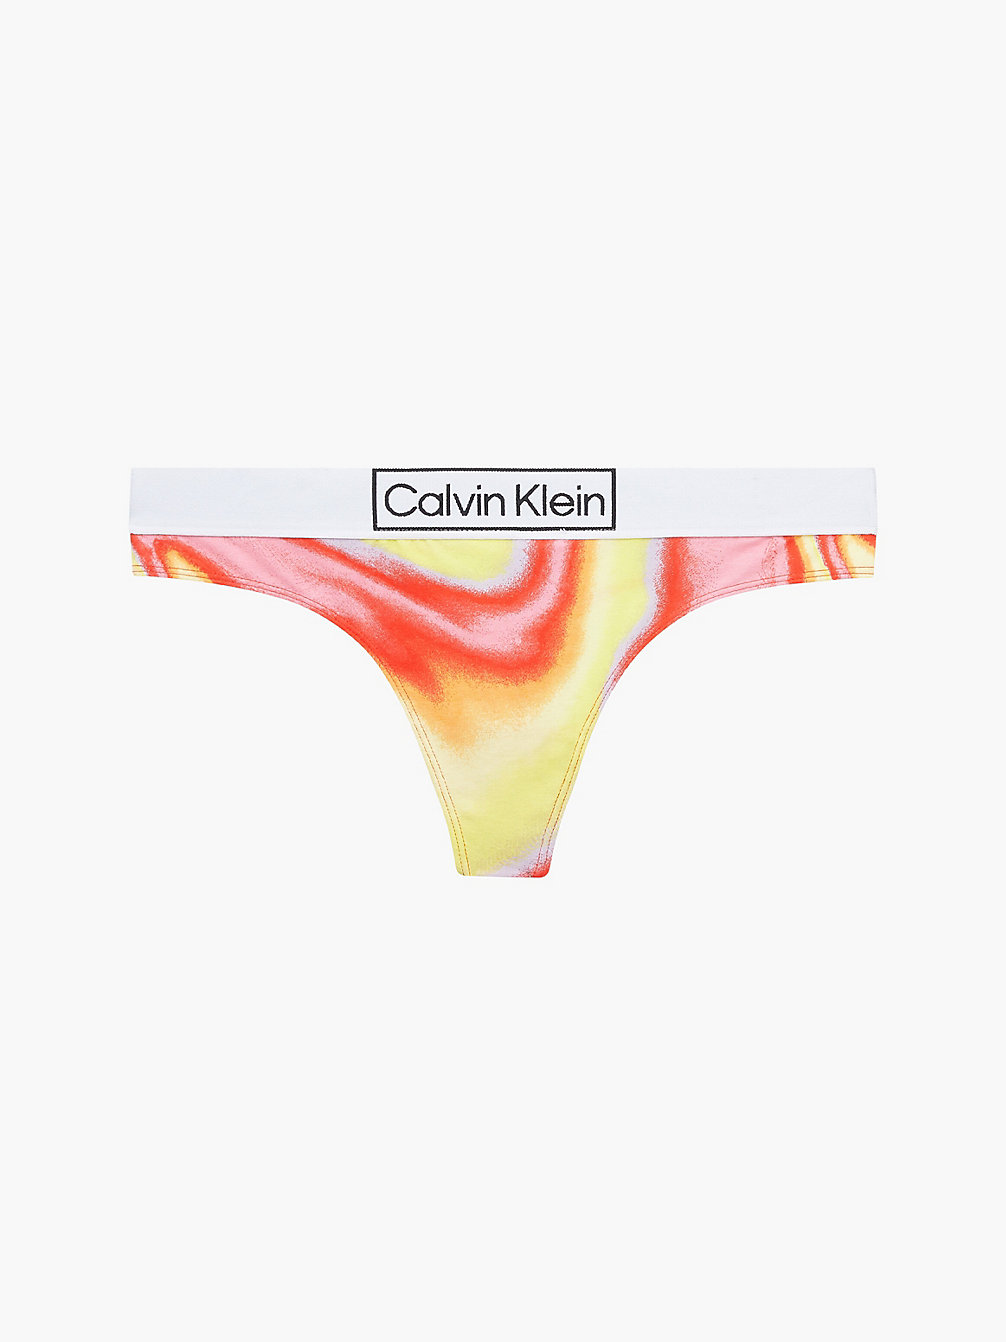 IRIDESCENT PRINT_TUSCAN TERRA COTTA Thong - Pride undefined women Calvin Klein